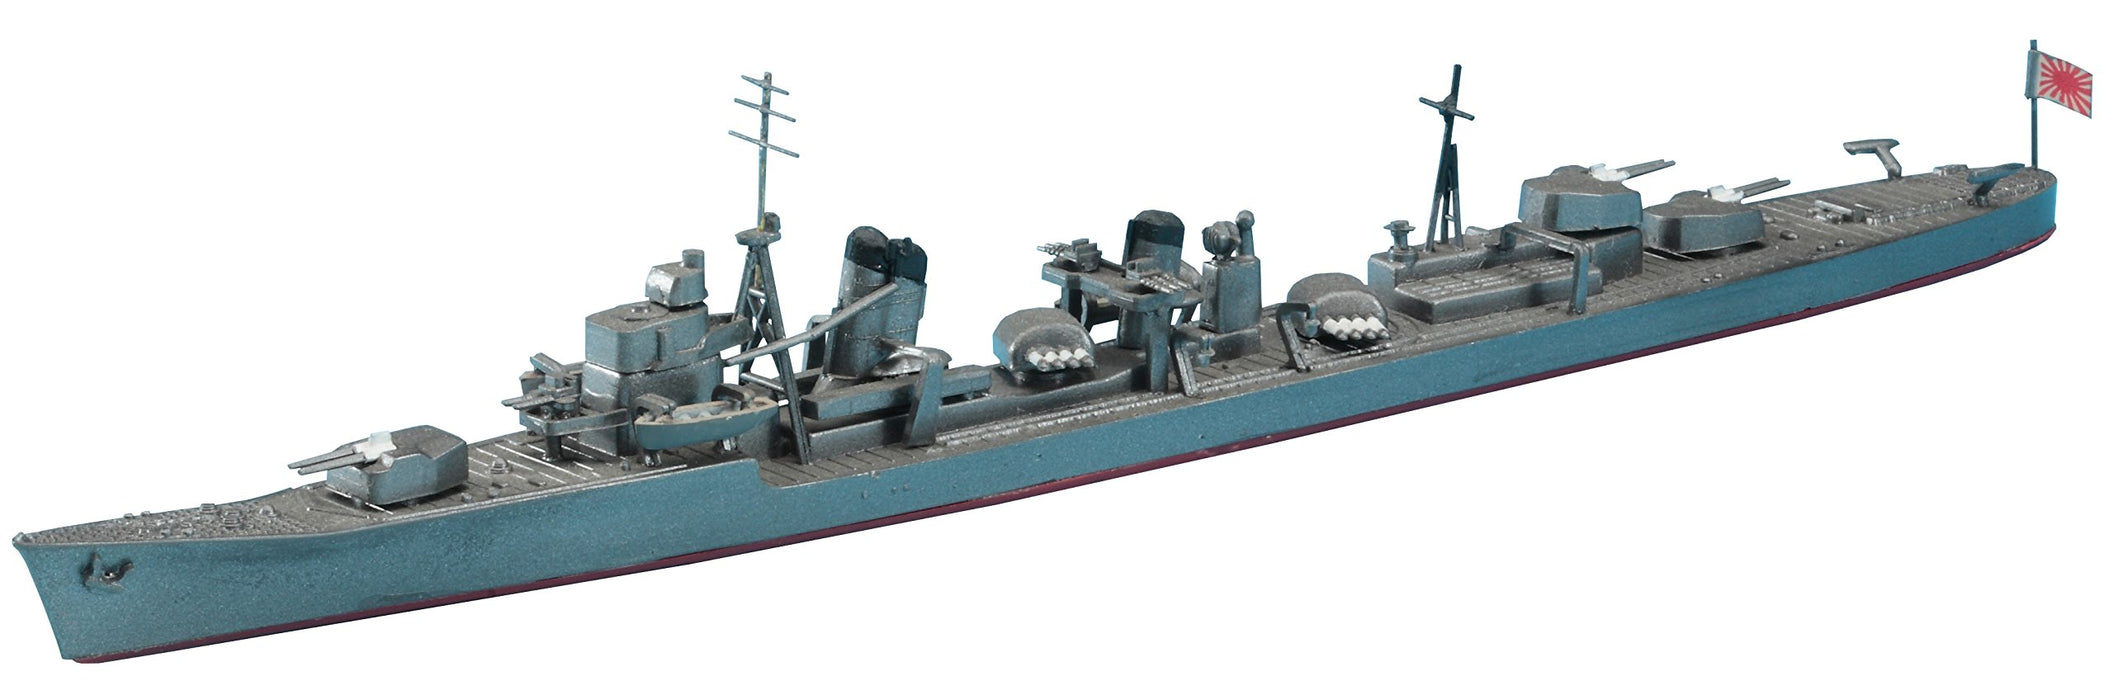 Hasegawa 1/700 Water Line Series Japanese Navy Destroyer Yugumo Plastic Model 410